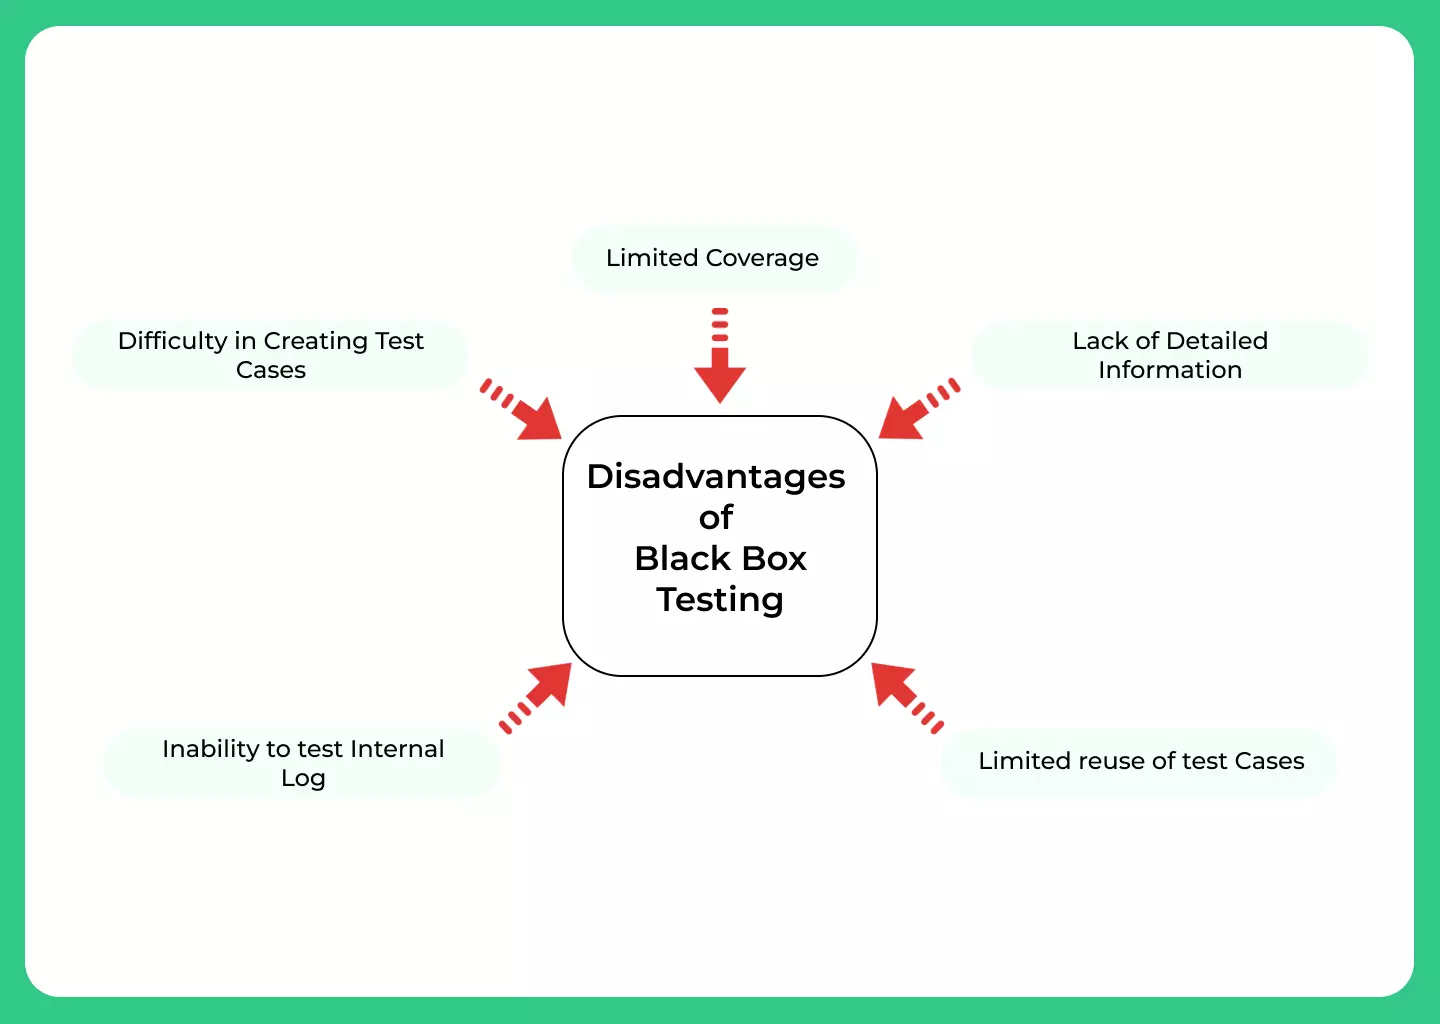 Disadvantages of Black Box Testing